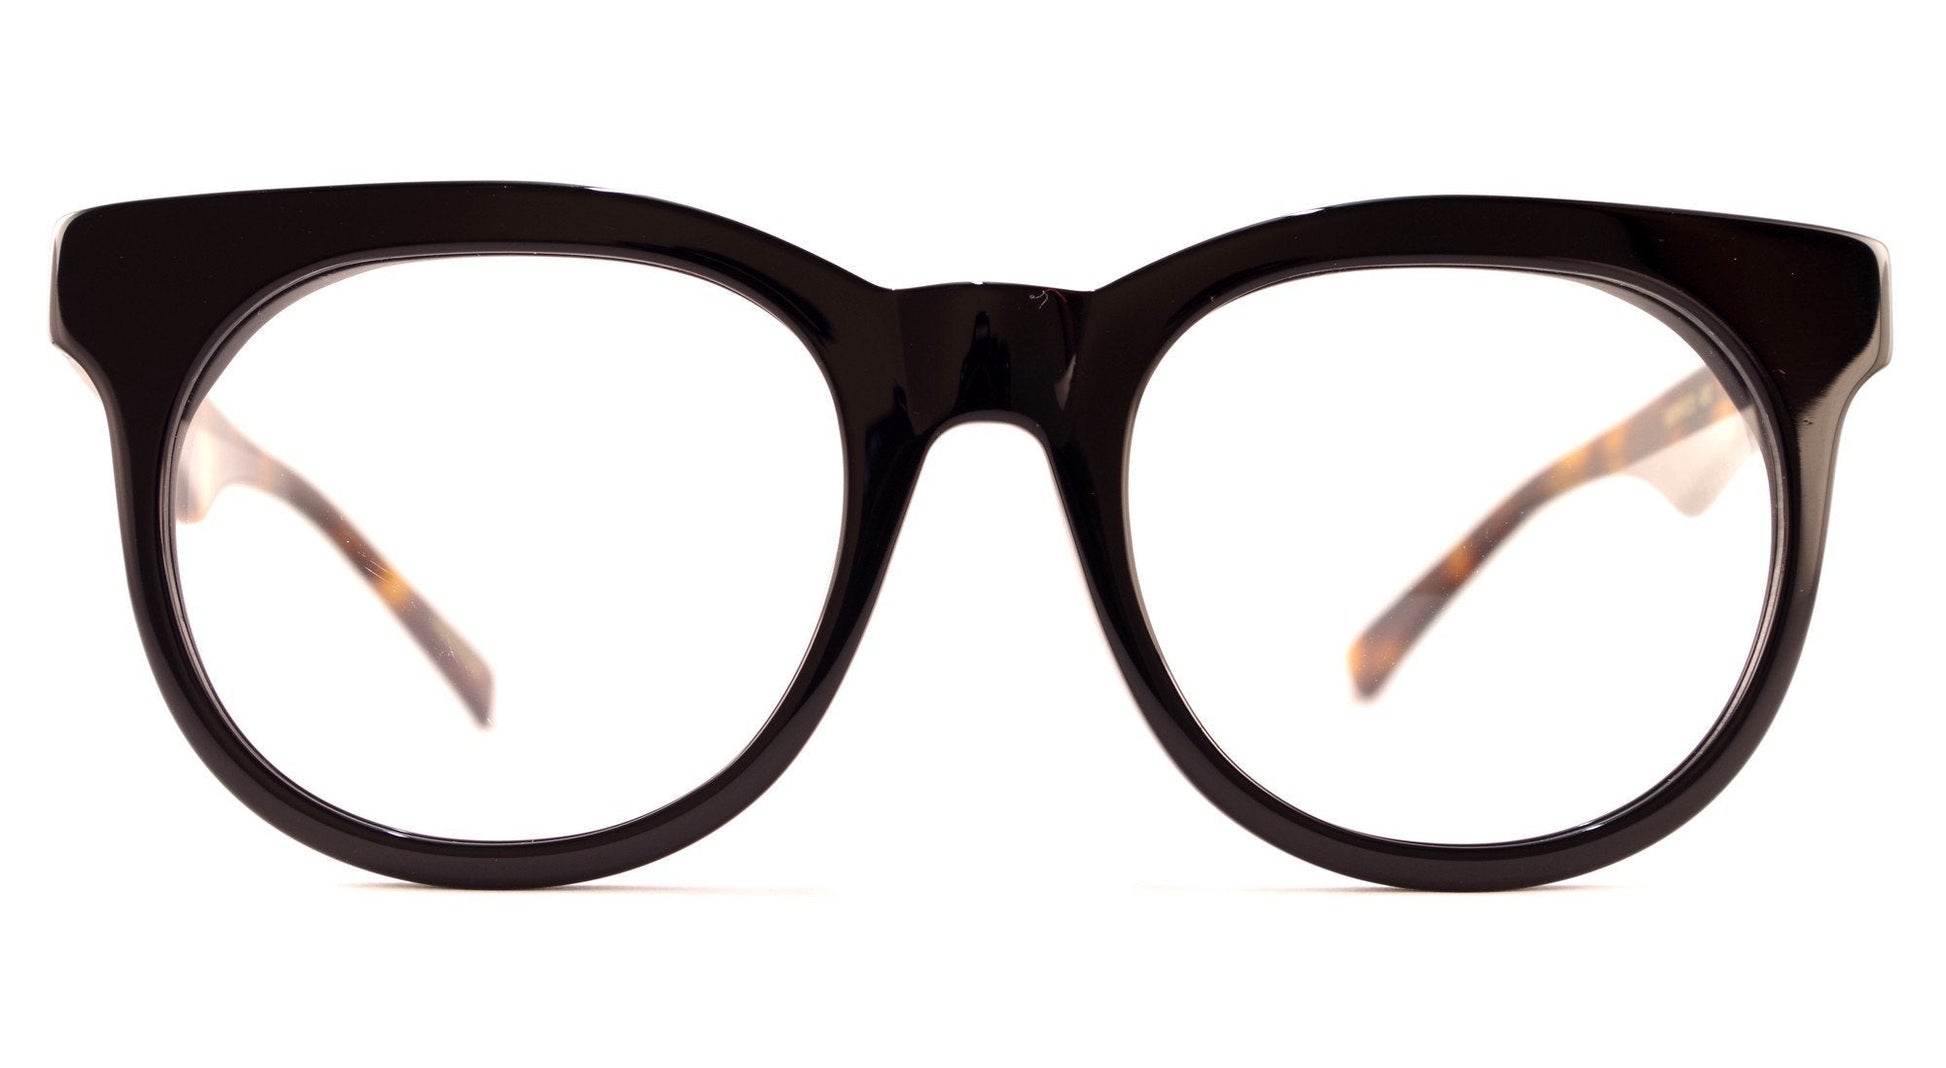 LDNR Berwick 002 Glasses (Black)